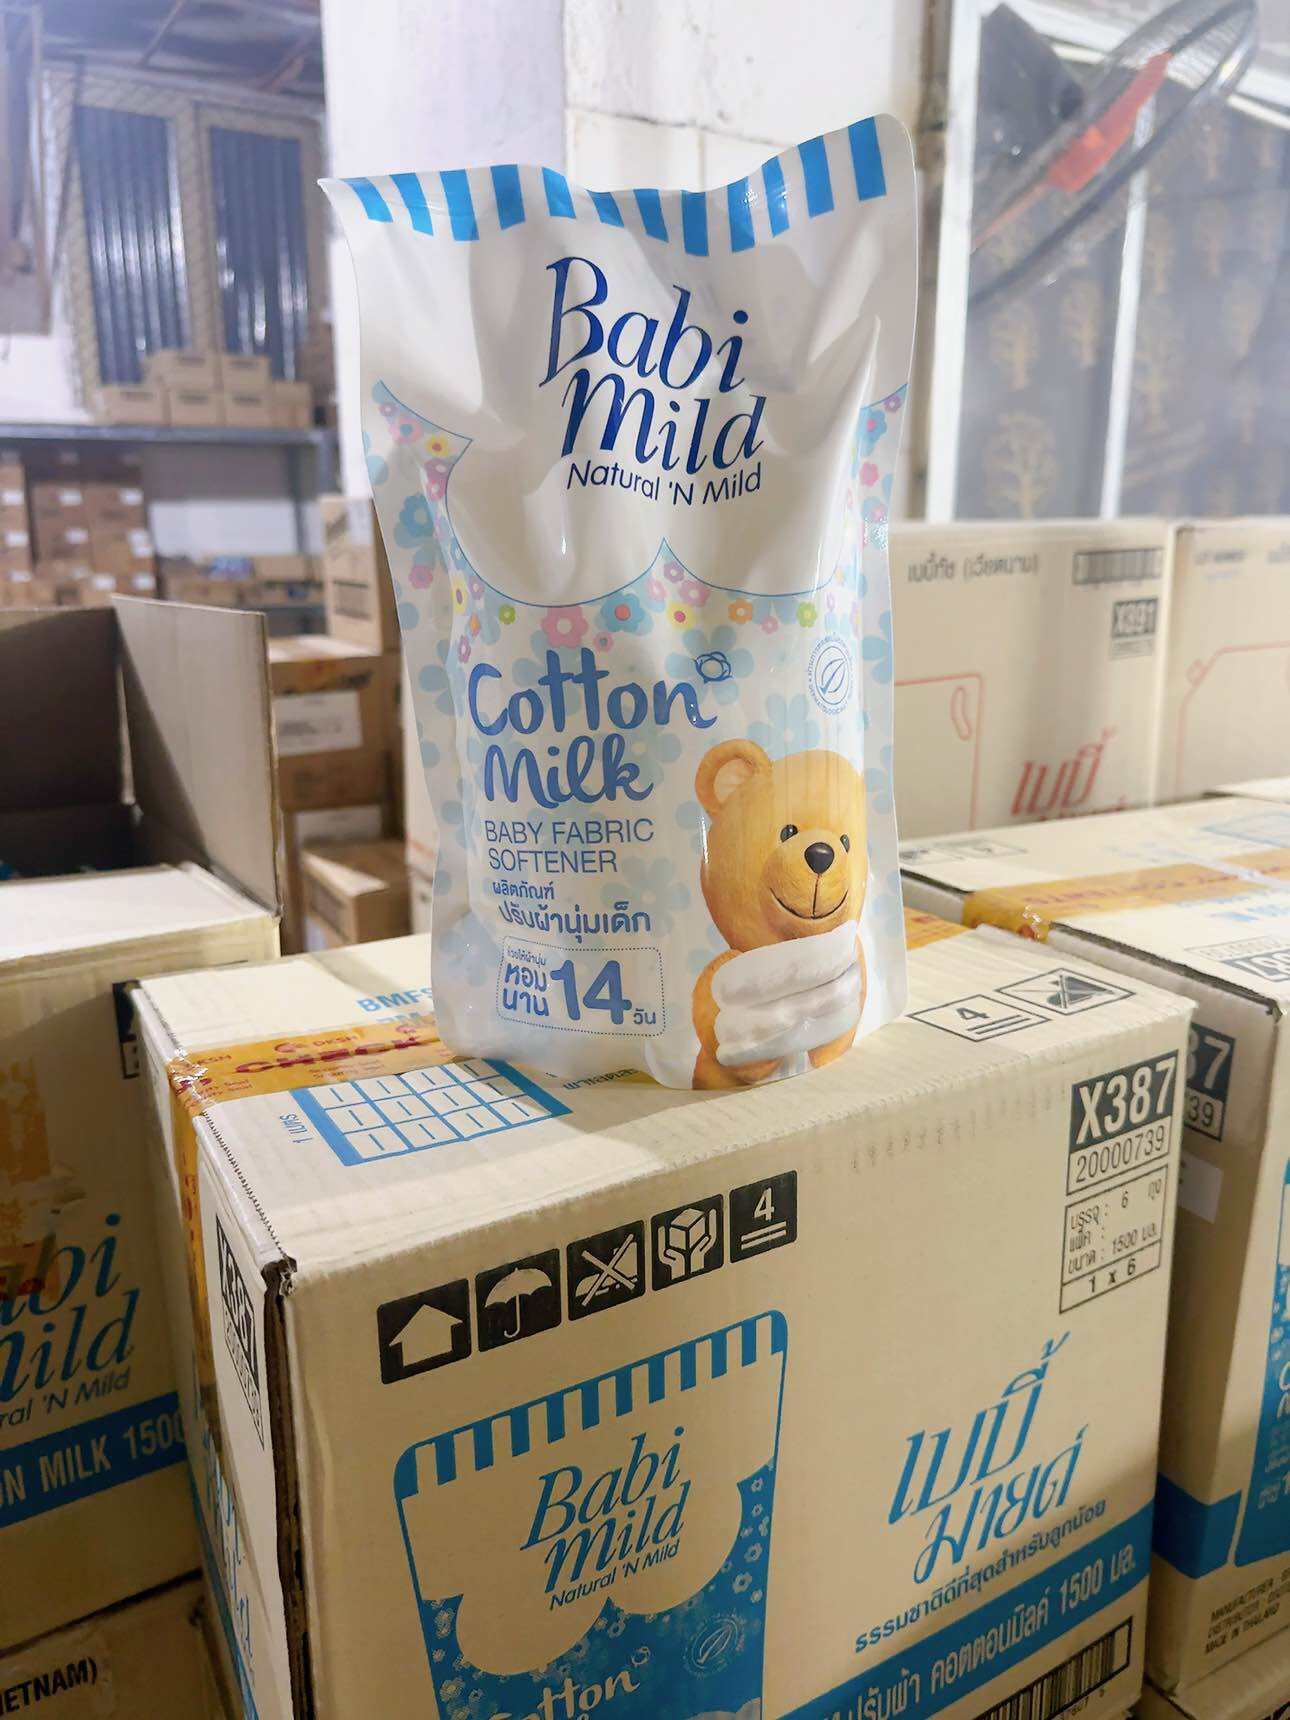 Nước xả vải cho trẻ em babi mild baby fabric softener cotton milk túi 1